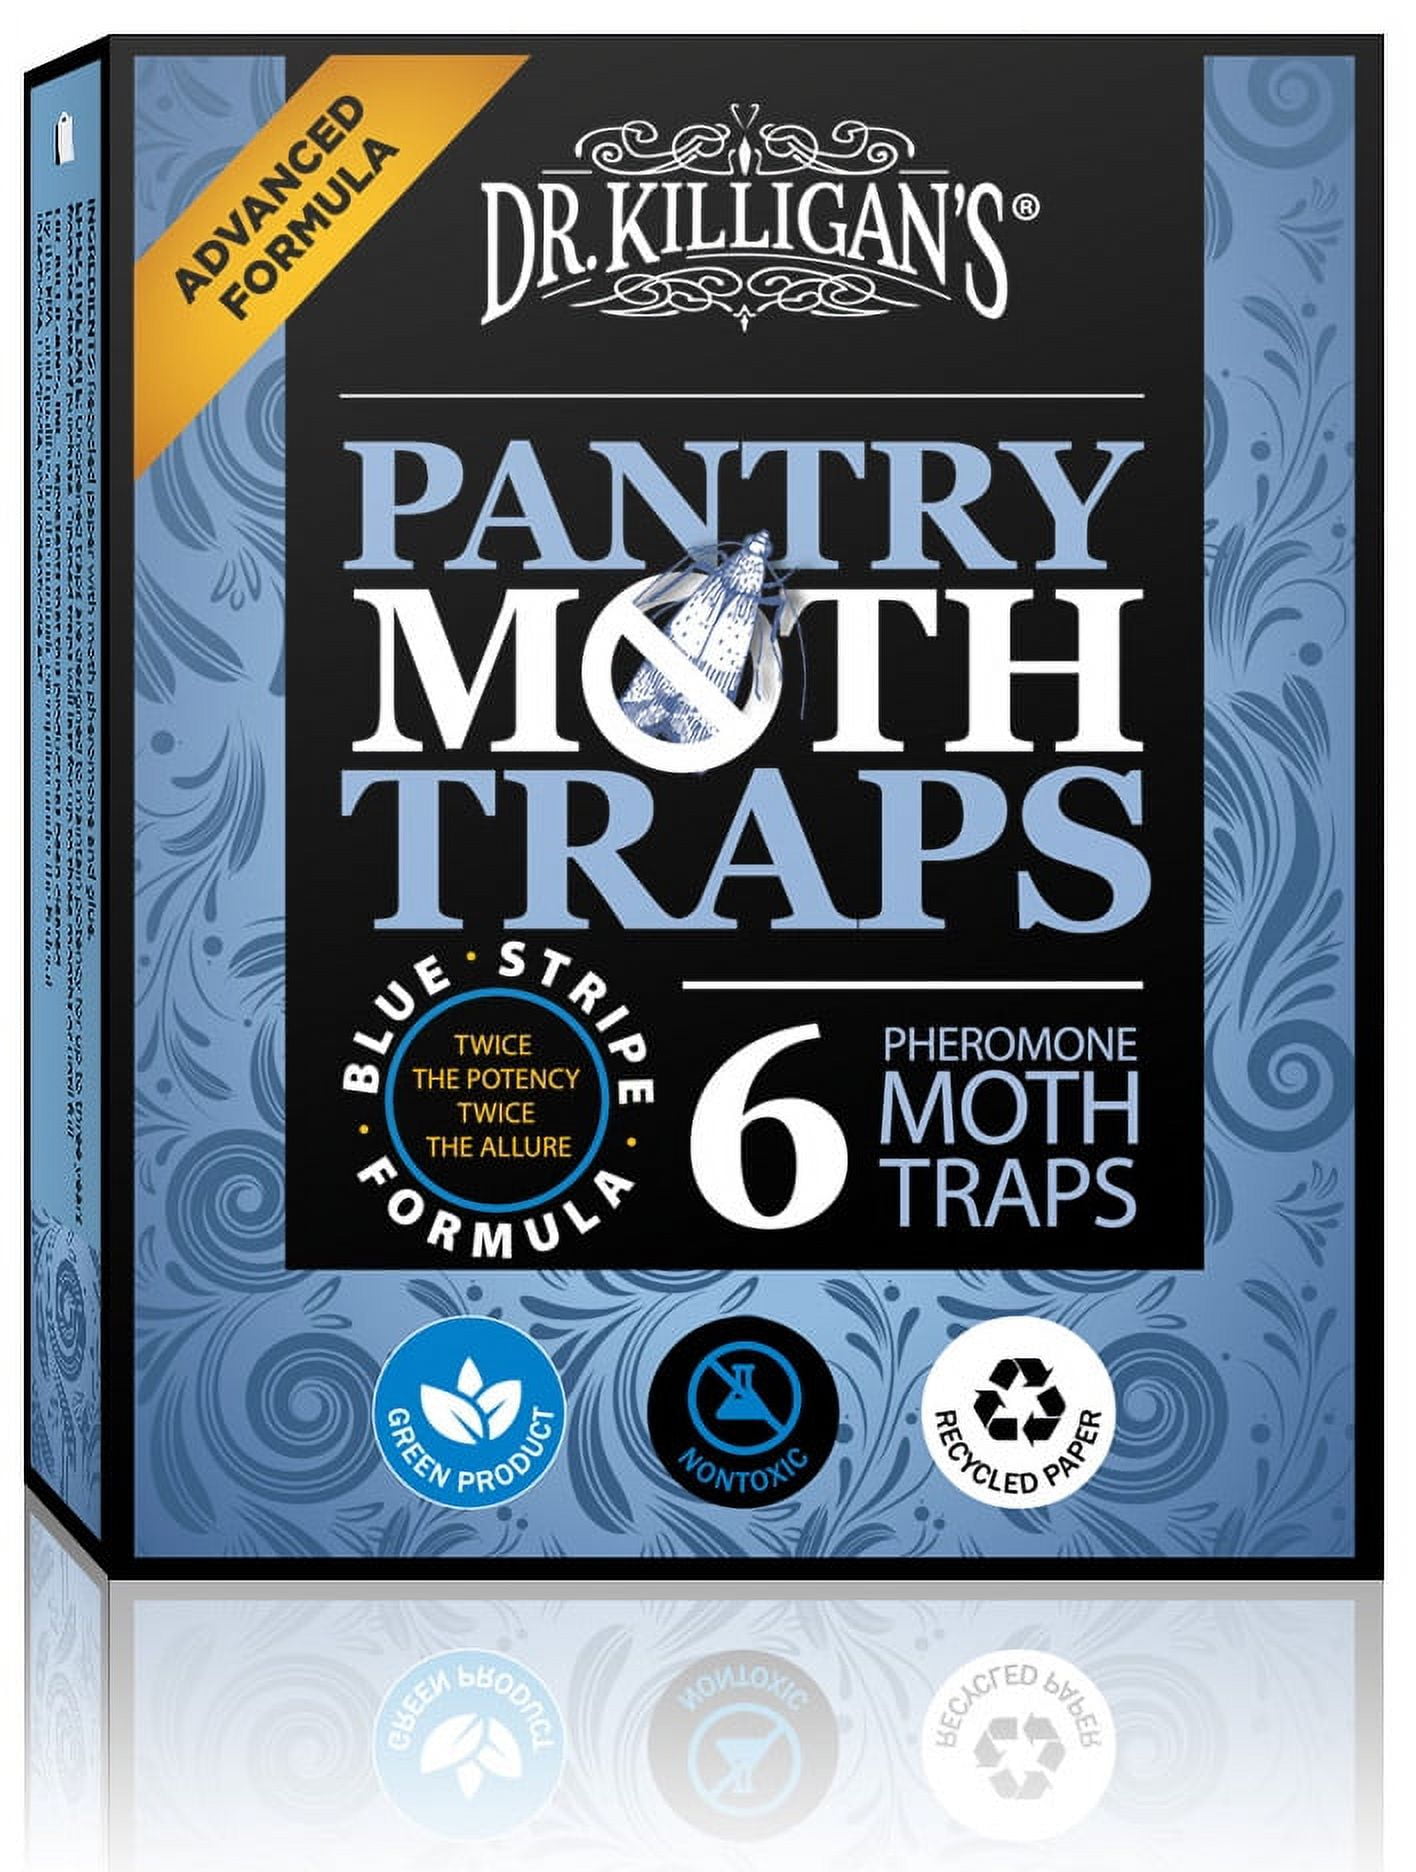 Dr. Killigans Premium Pantry Moth Traps Wpheromones Prime Safe Non